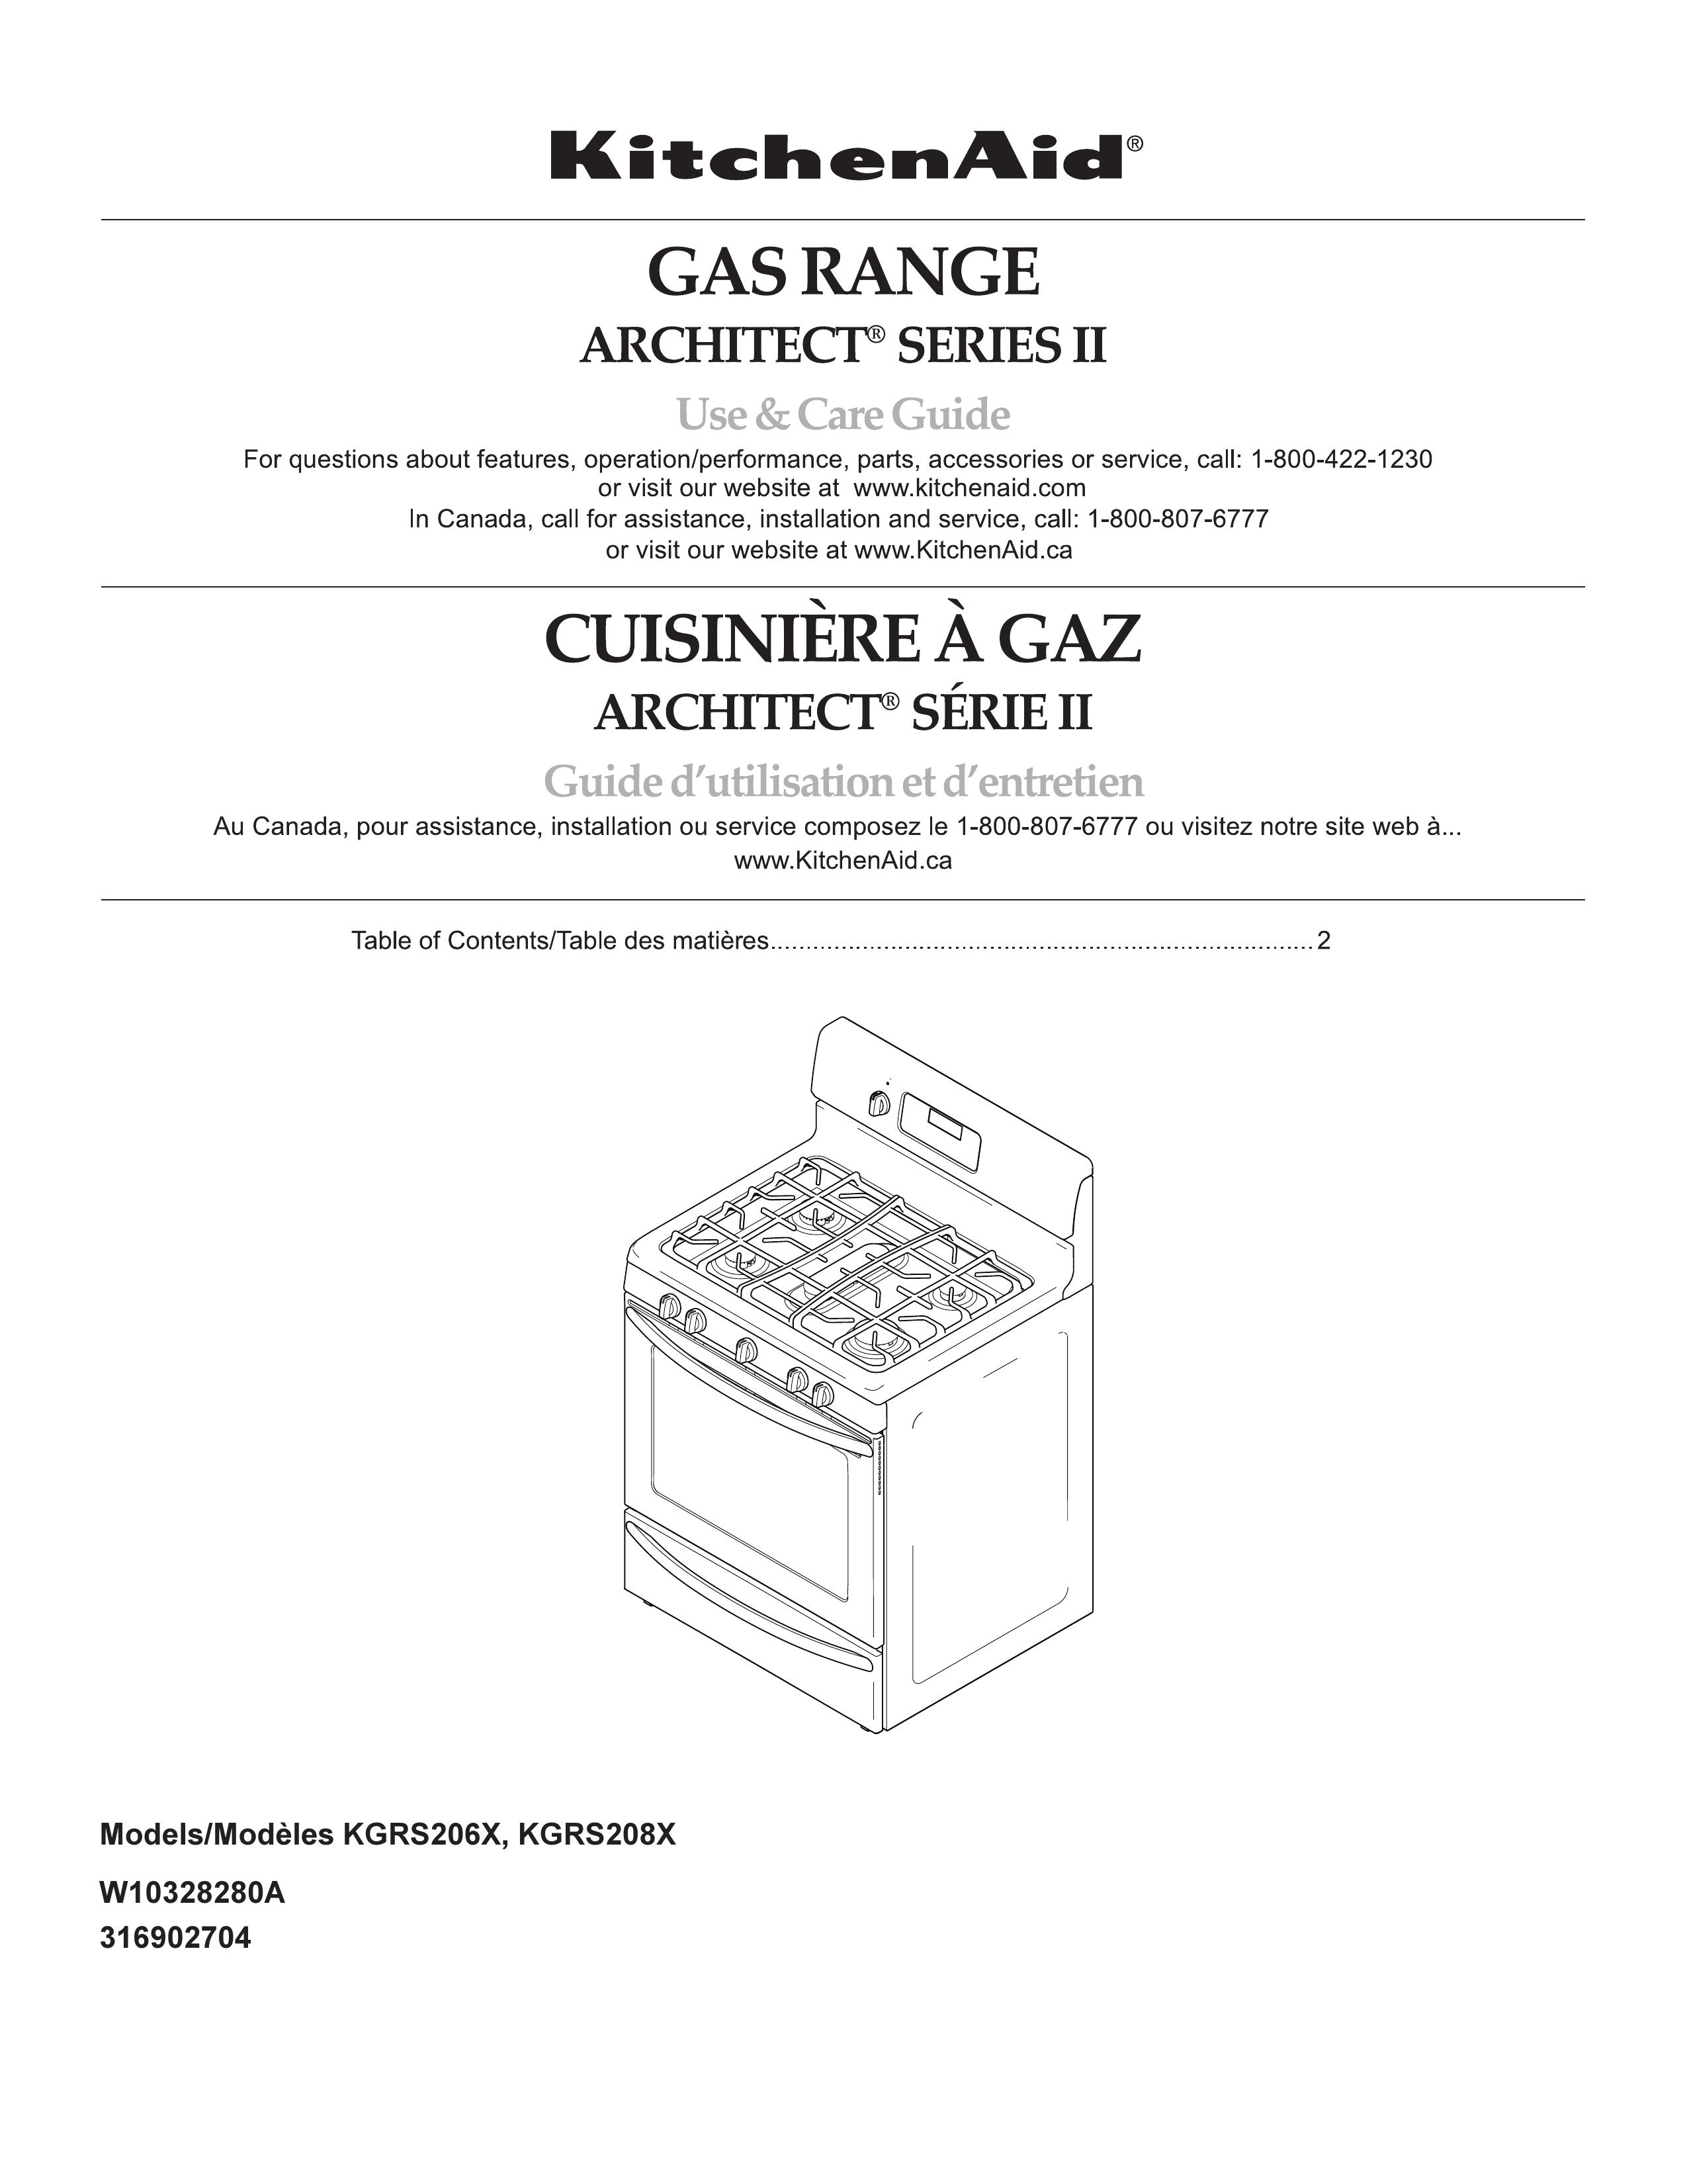 KitchenAid Gas Range Architect Series II Gas Grill User Manual